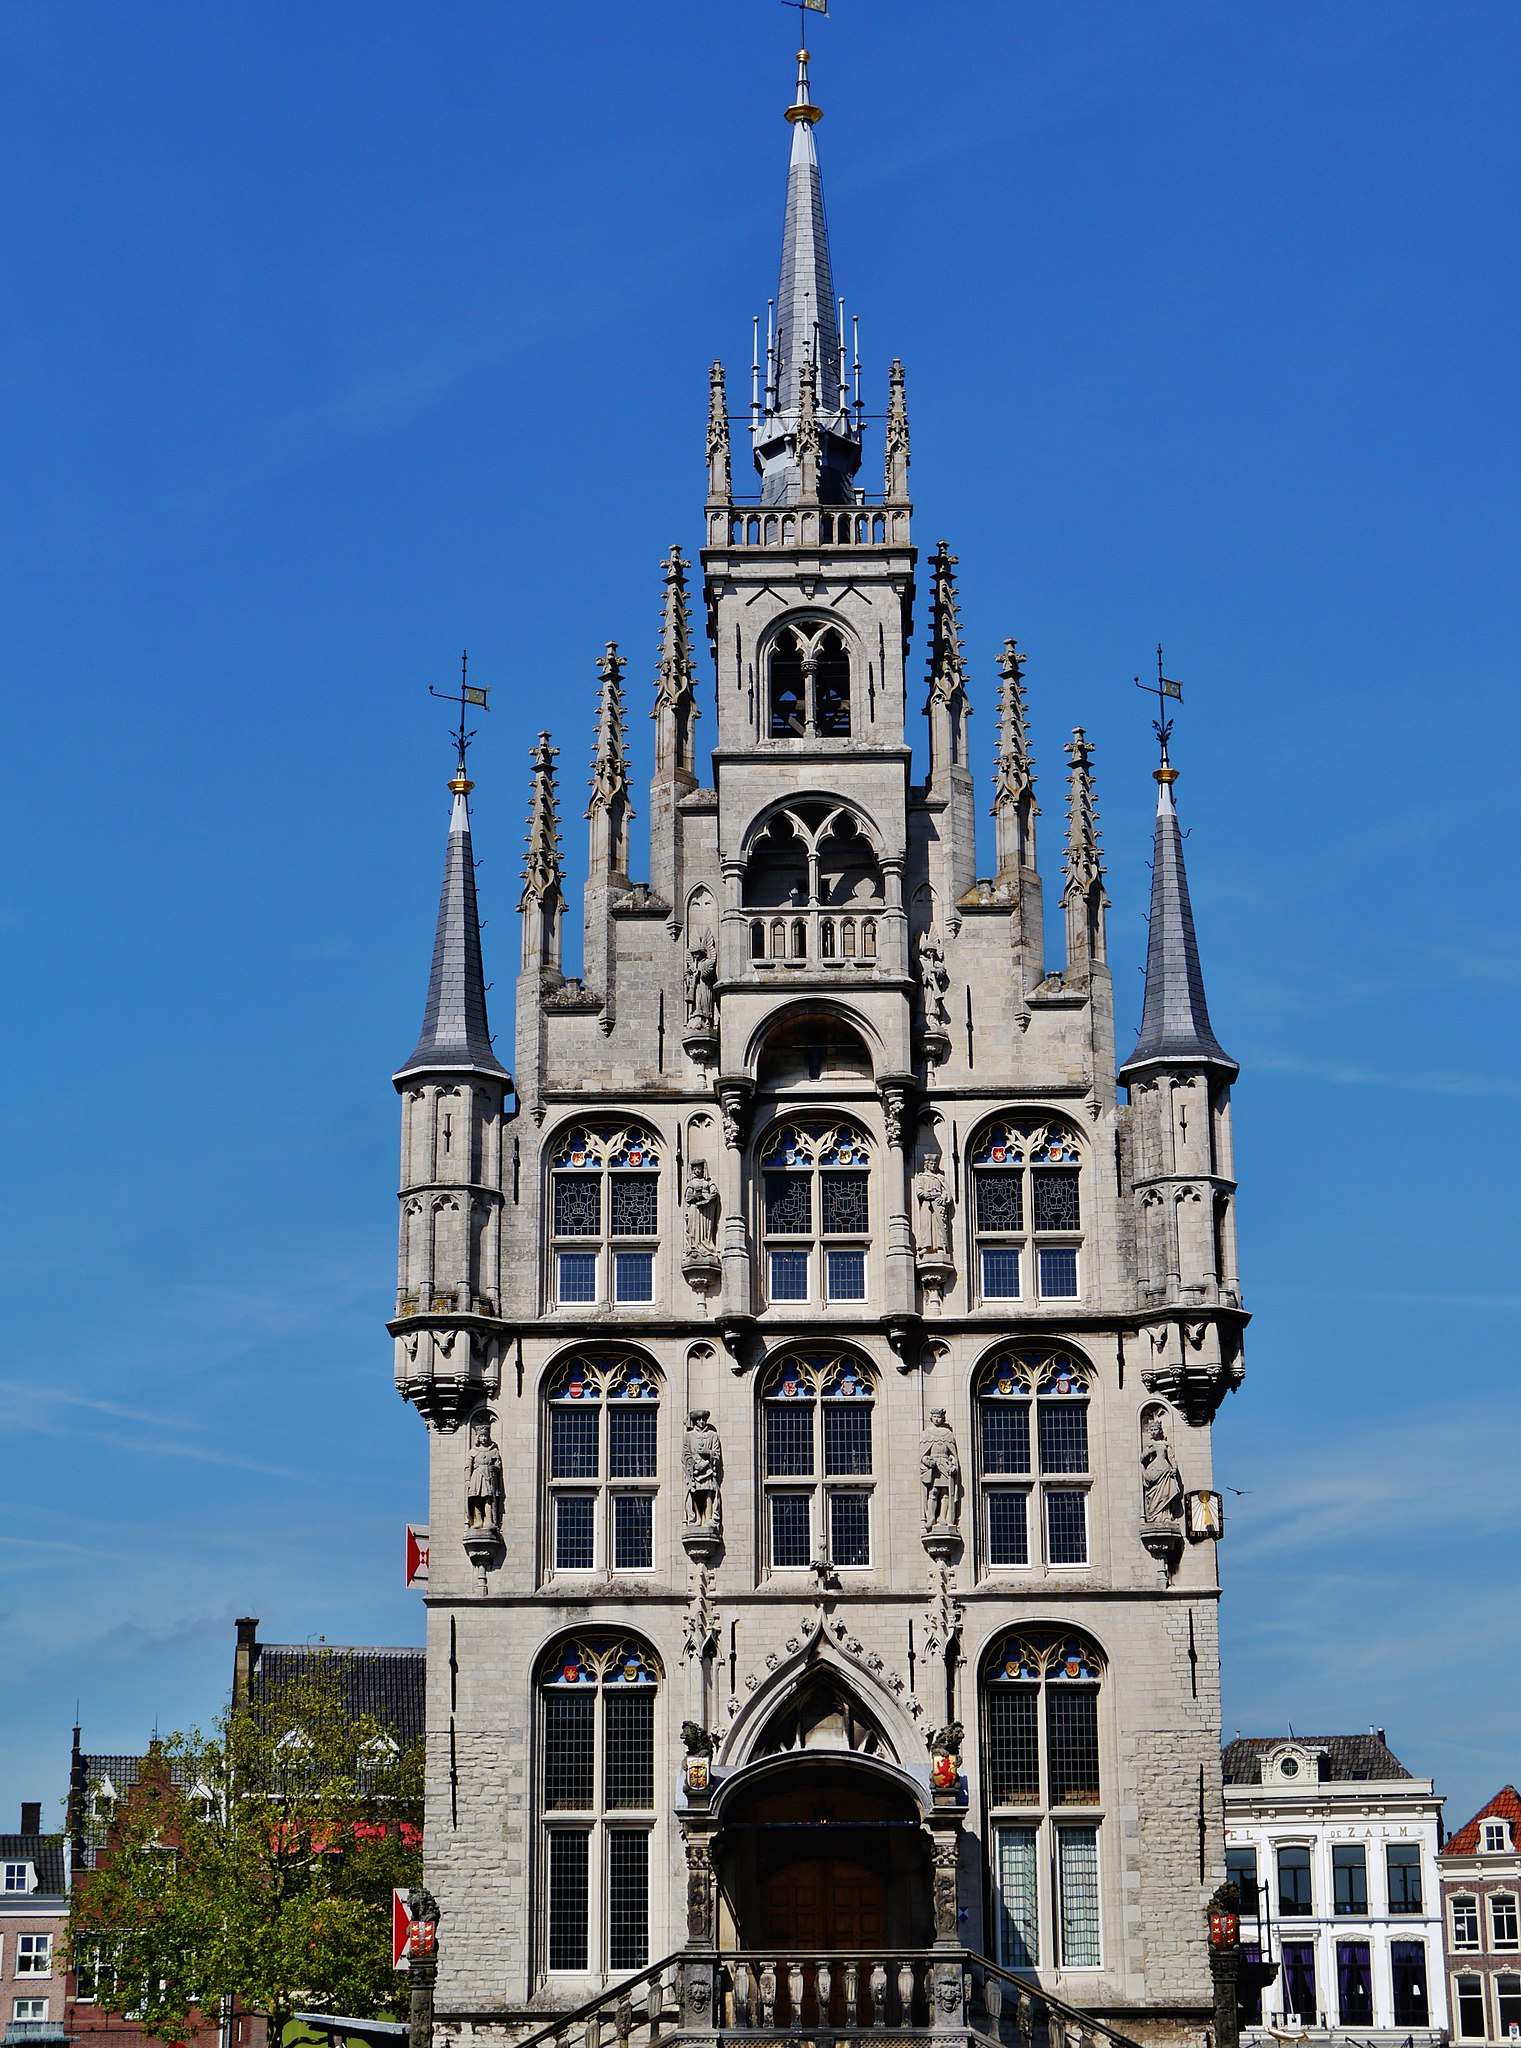 A Town Hall de Gouda, construída em 1450 no estilo gótico 